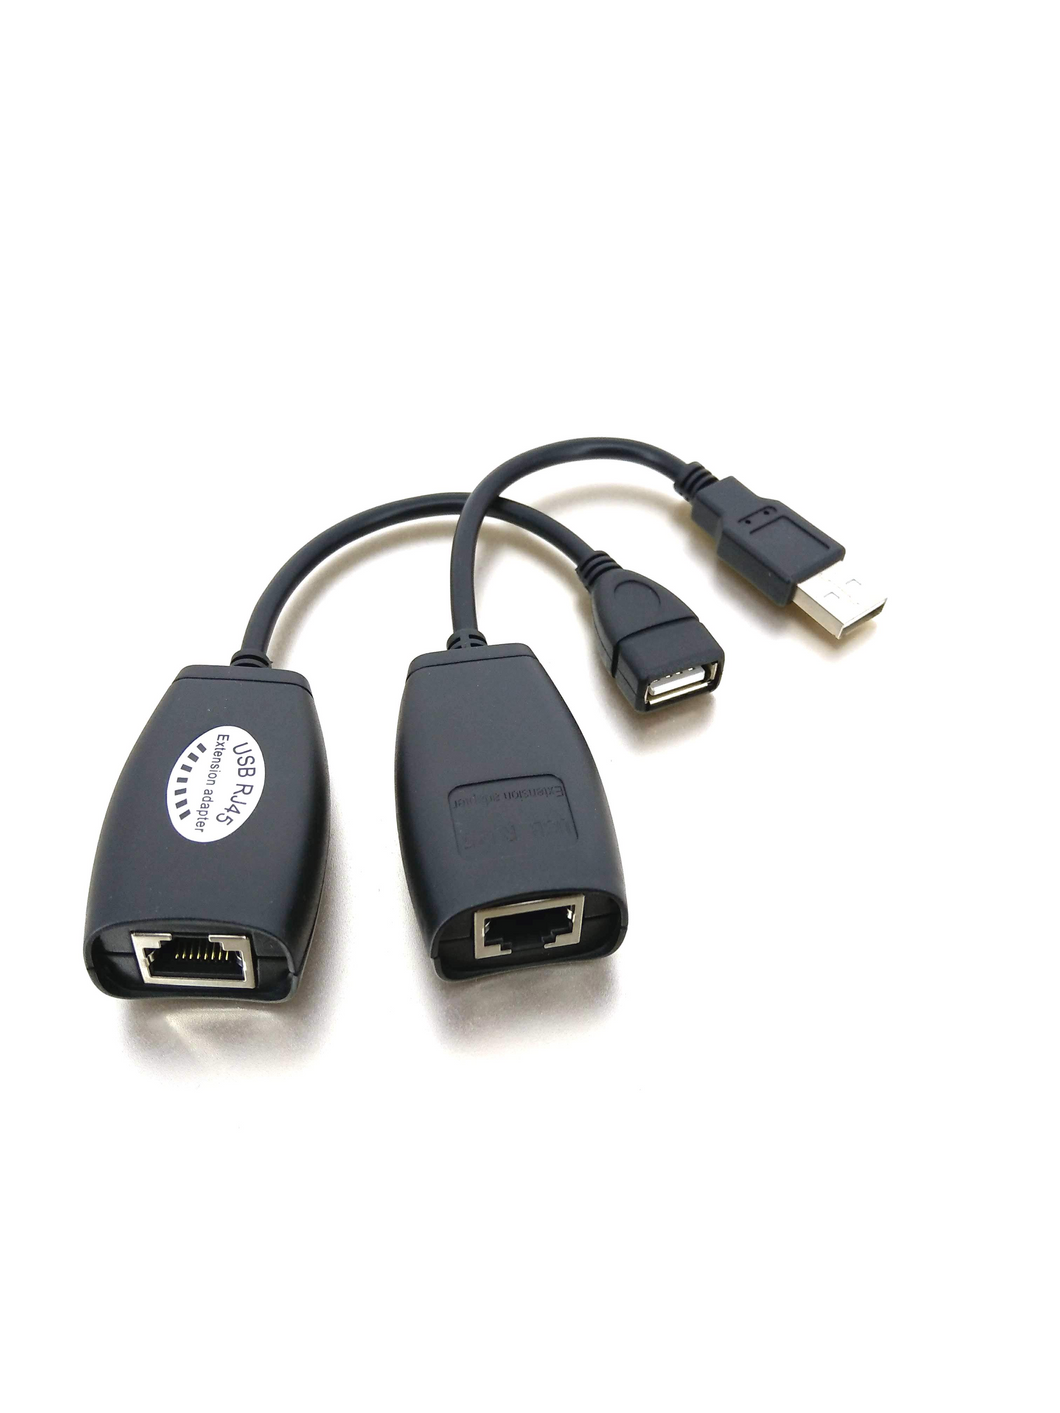 USB Extension Cable Over Cat5e RJ45 hk